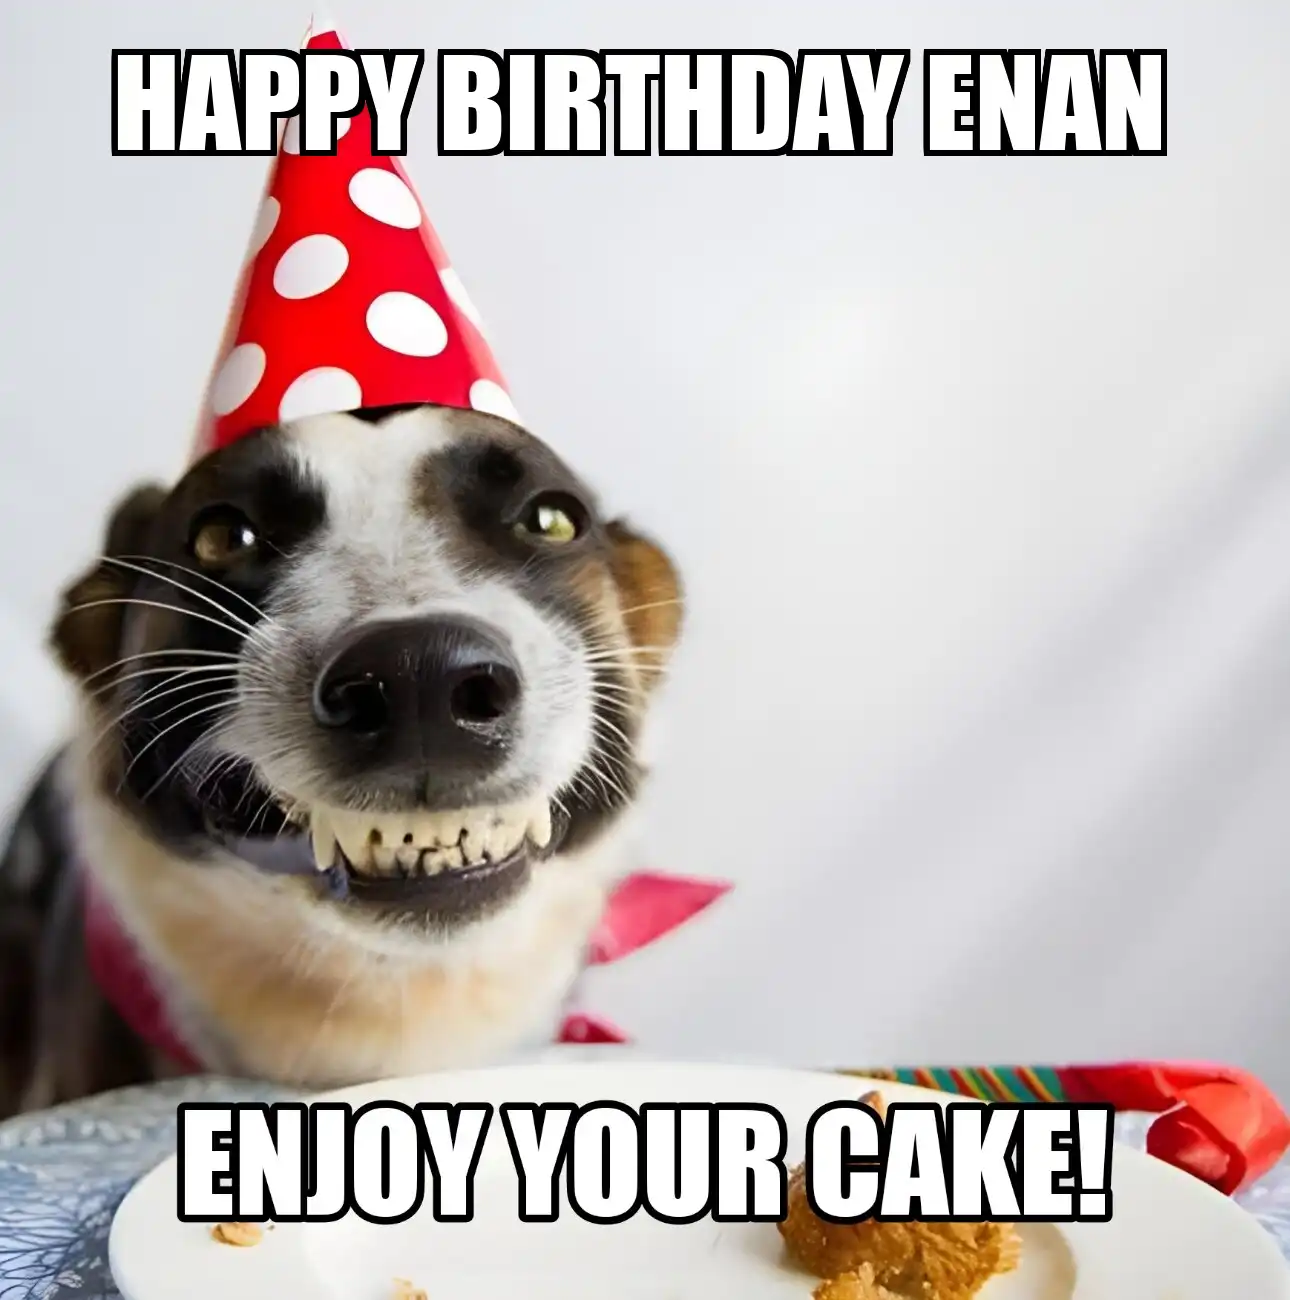 Happy Birthday Enan Enjoy Your Cake Dog Meme